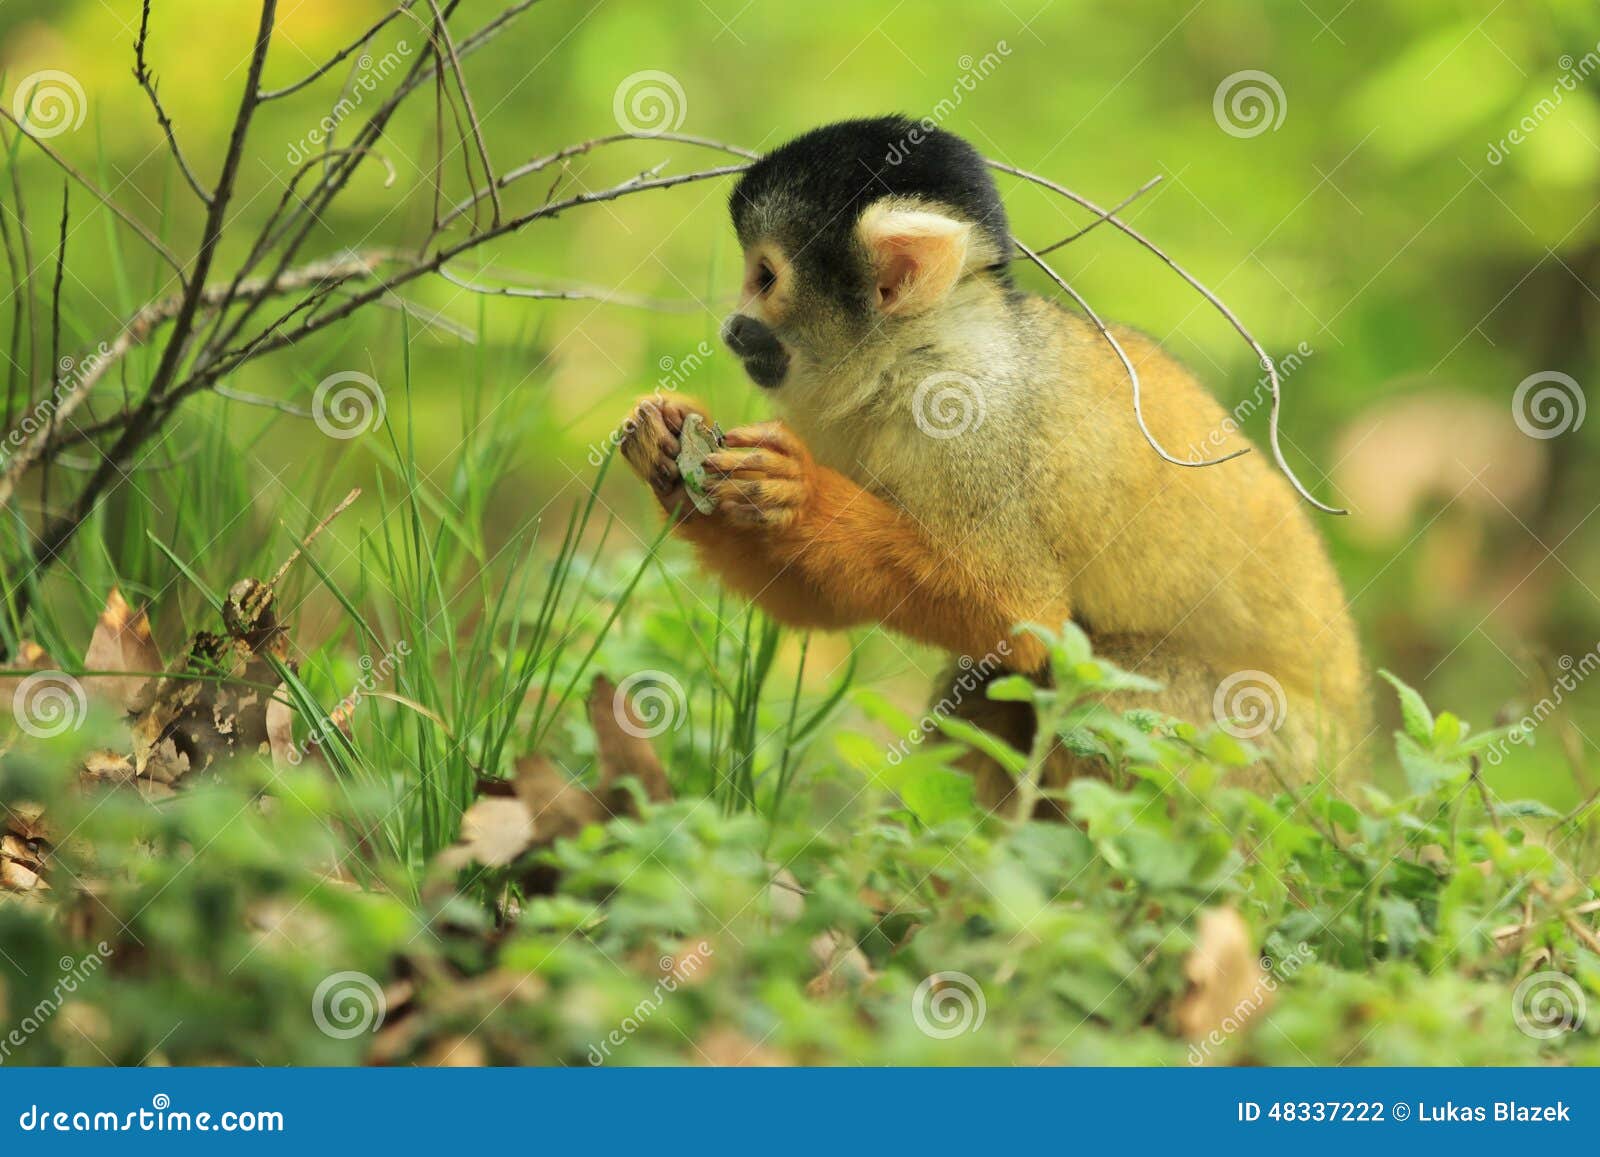 bolivian squirrel monkey